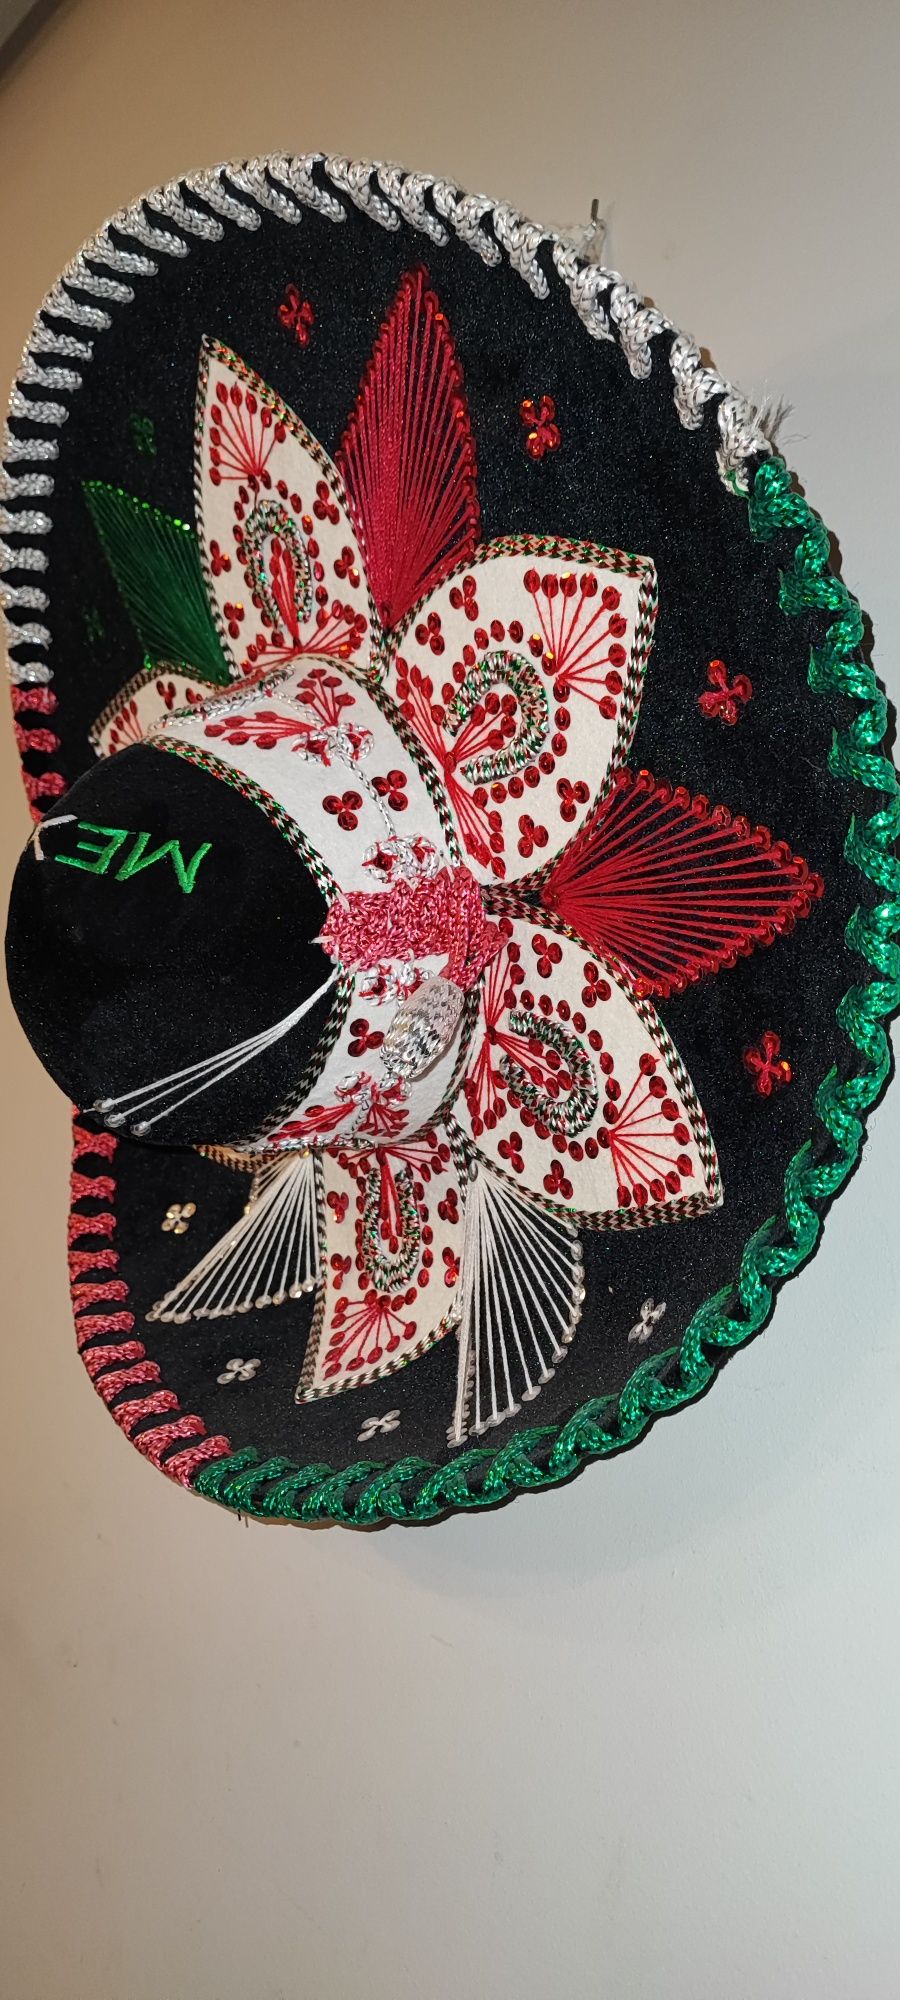 Sombrero kapelusz oryginalne z Meksyku